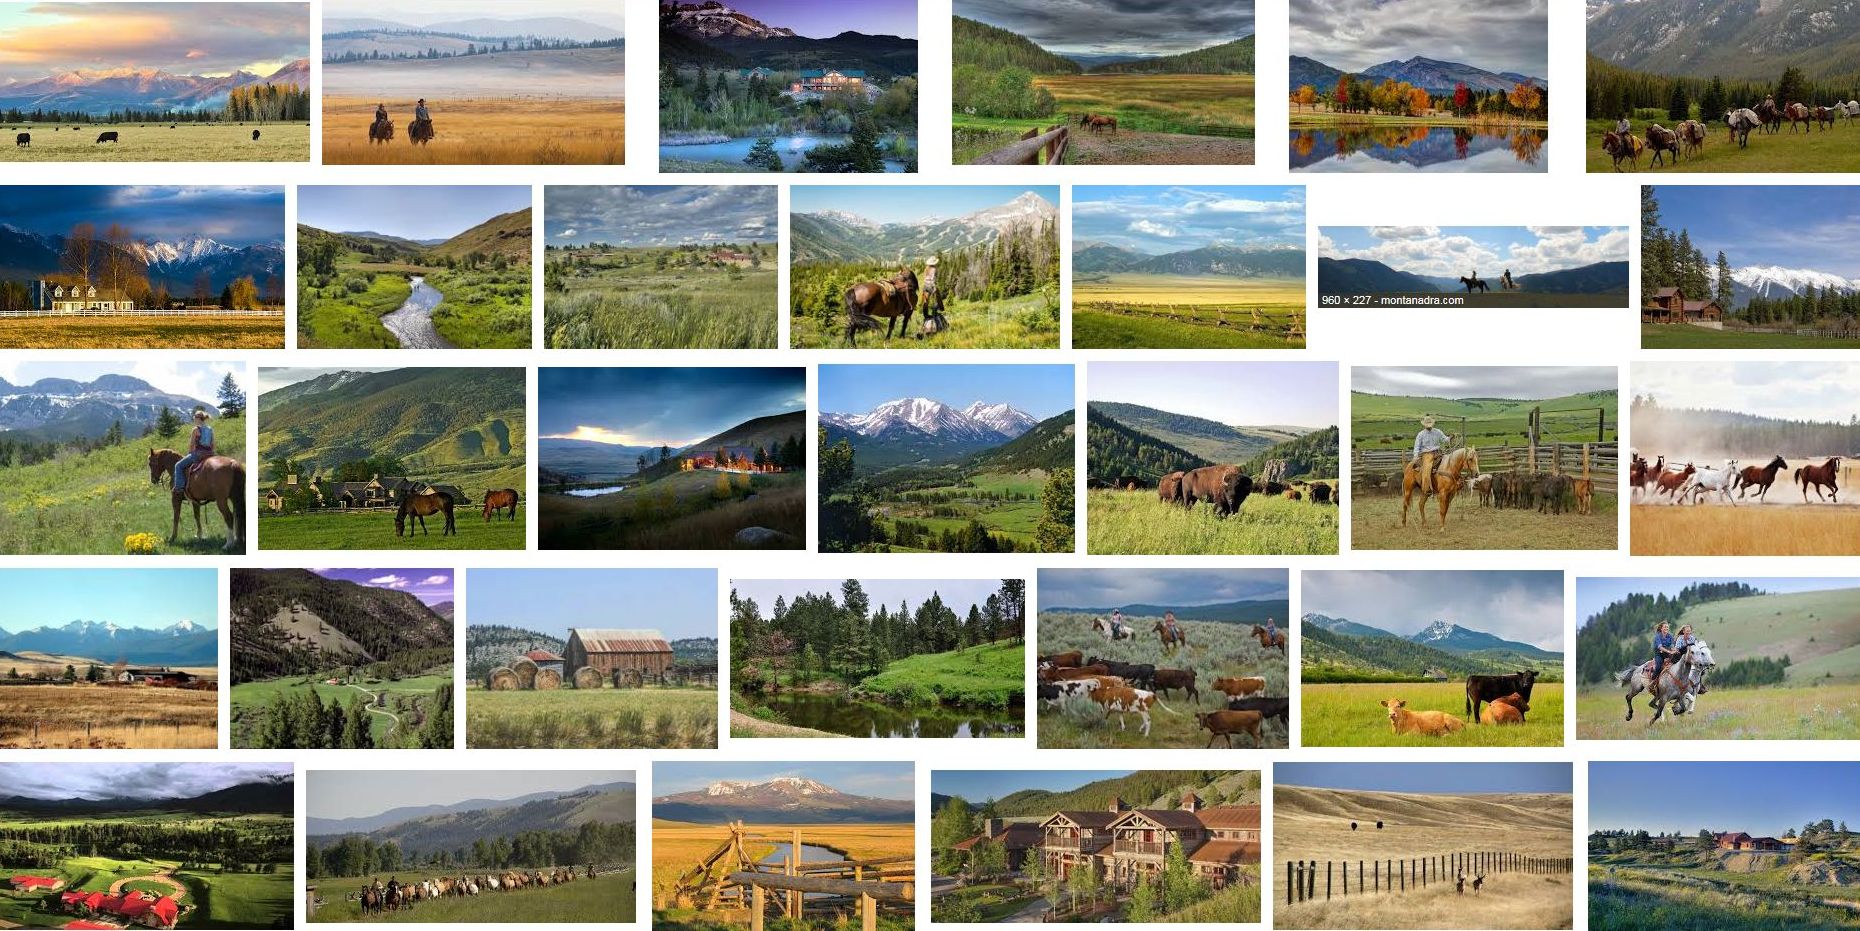 Montana Ranch Listings $1 Million To $2 Million